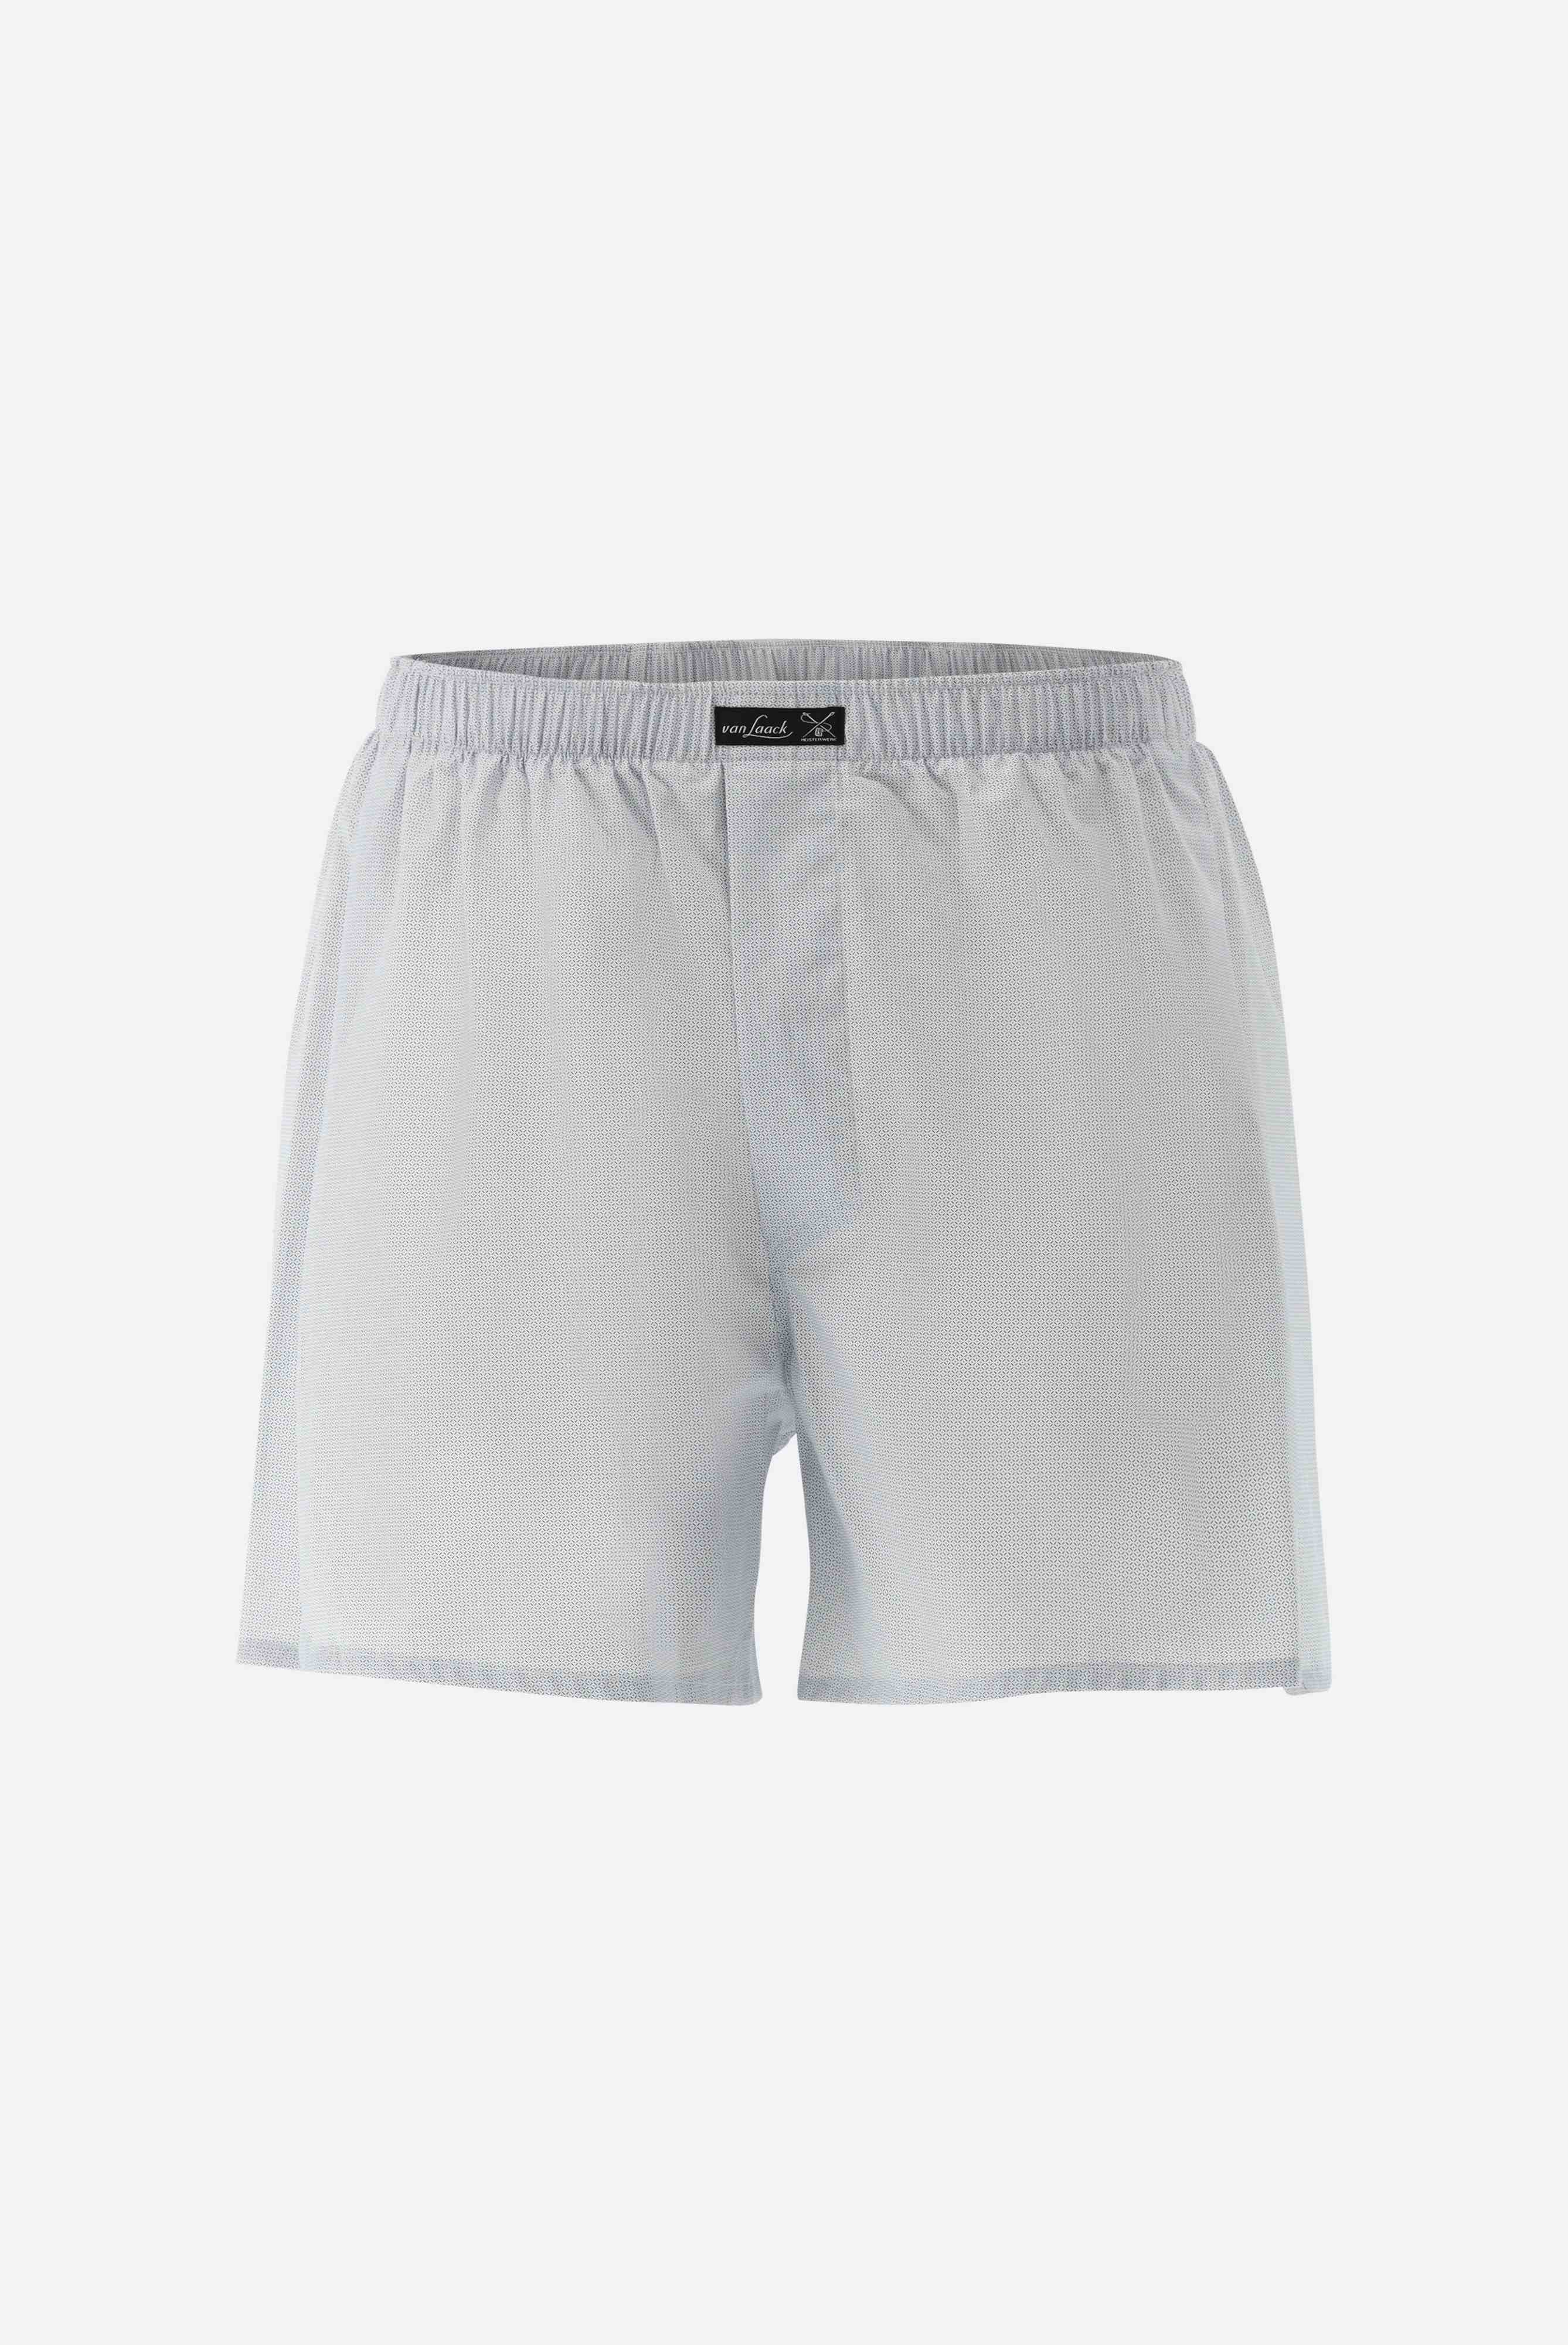 Underwear+Poplin Micro-Design-Print Boxer Shorts+91.1100..170514.007.46